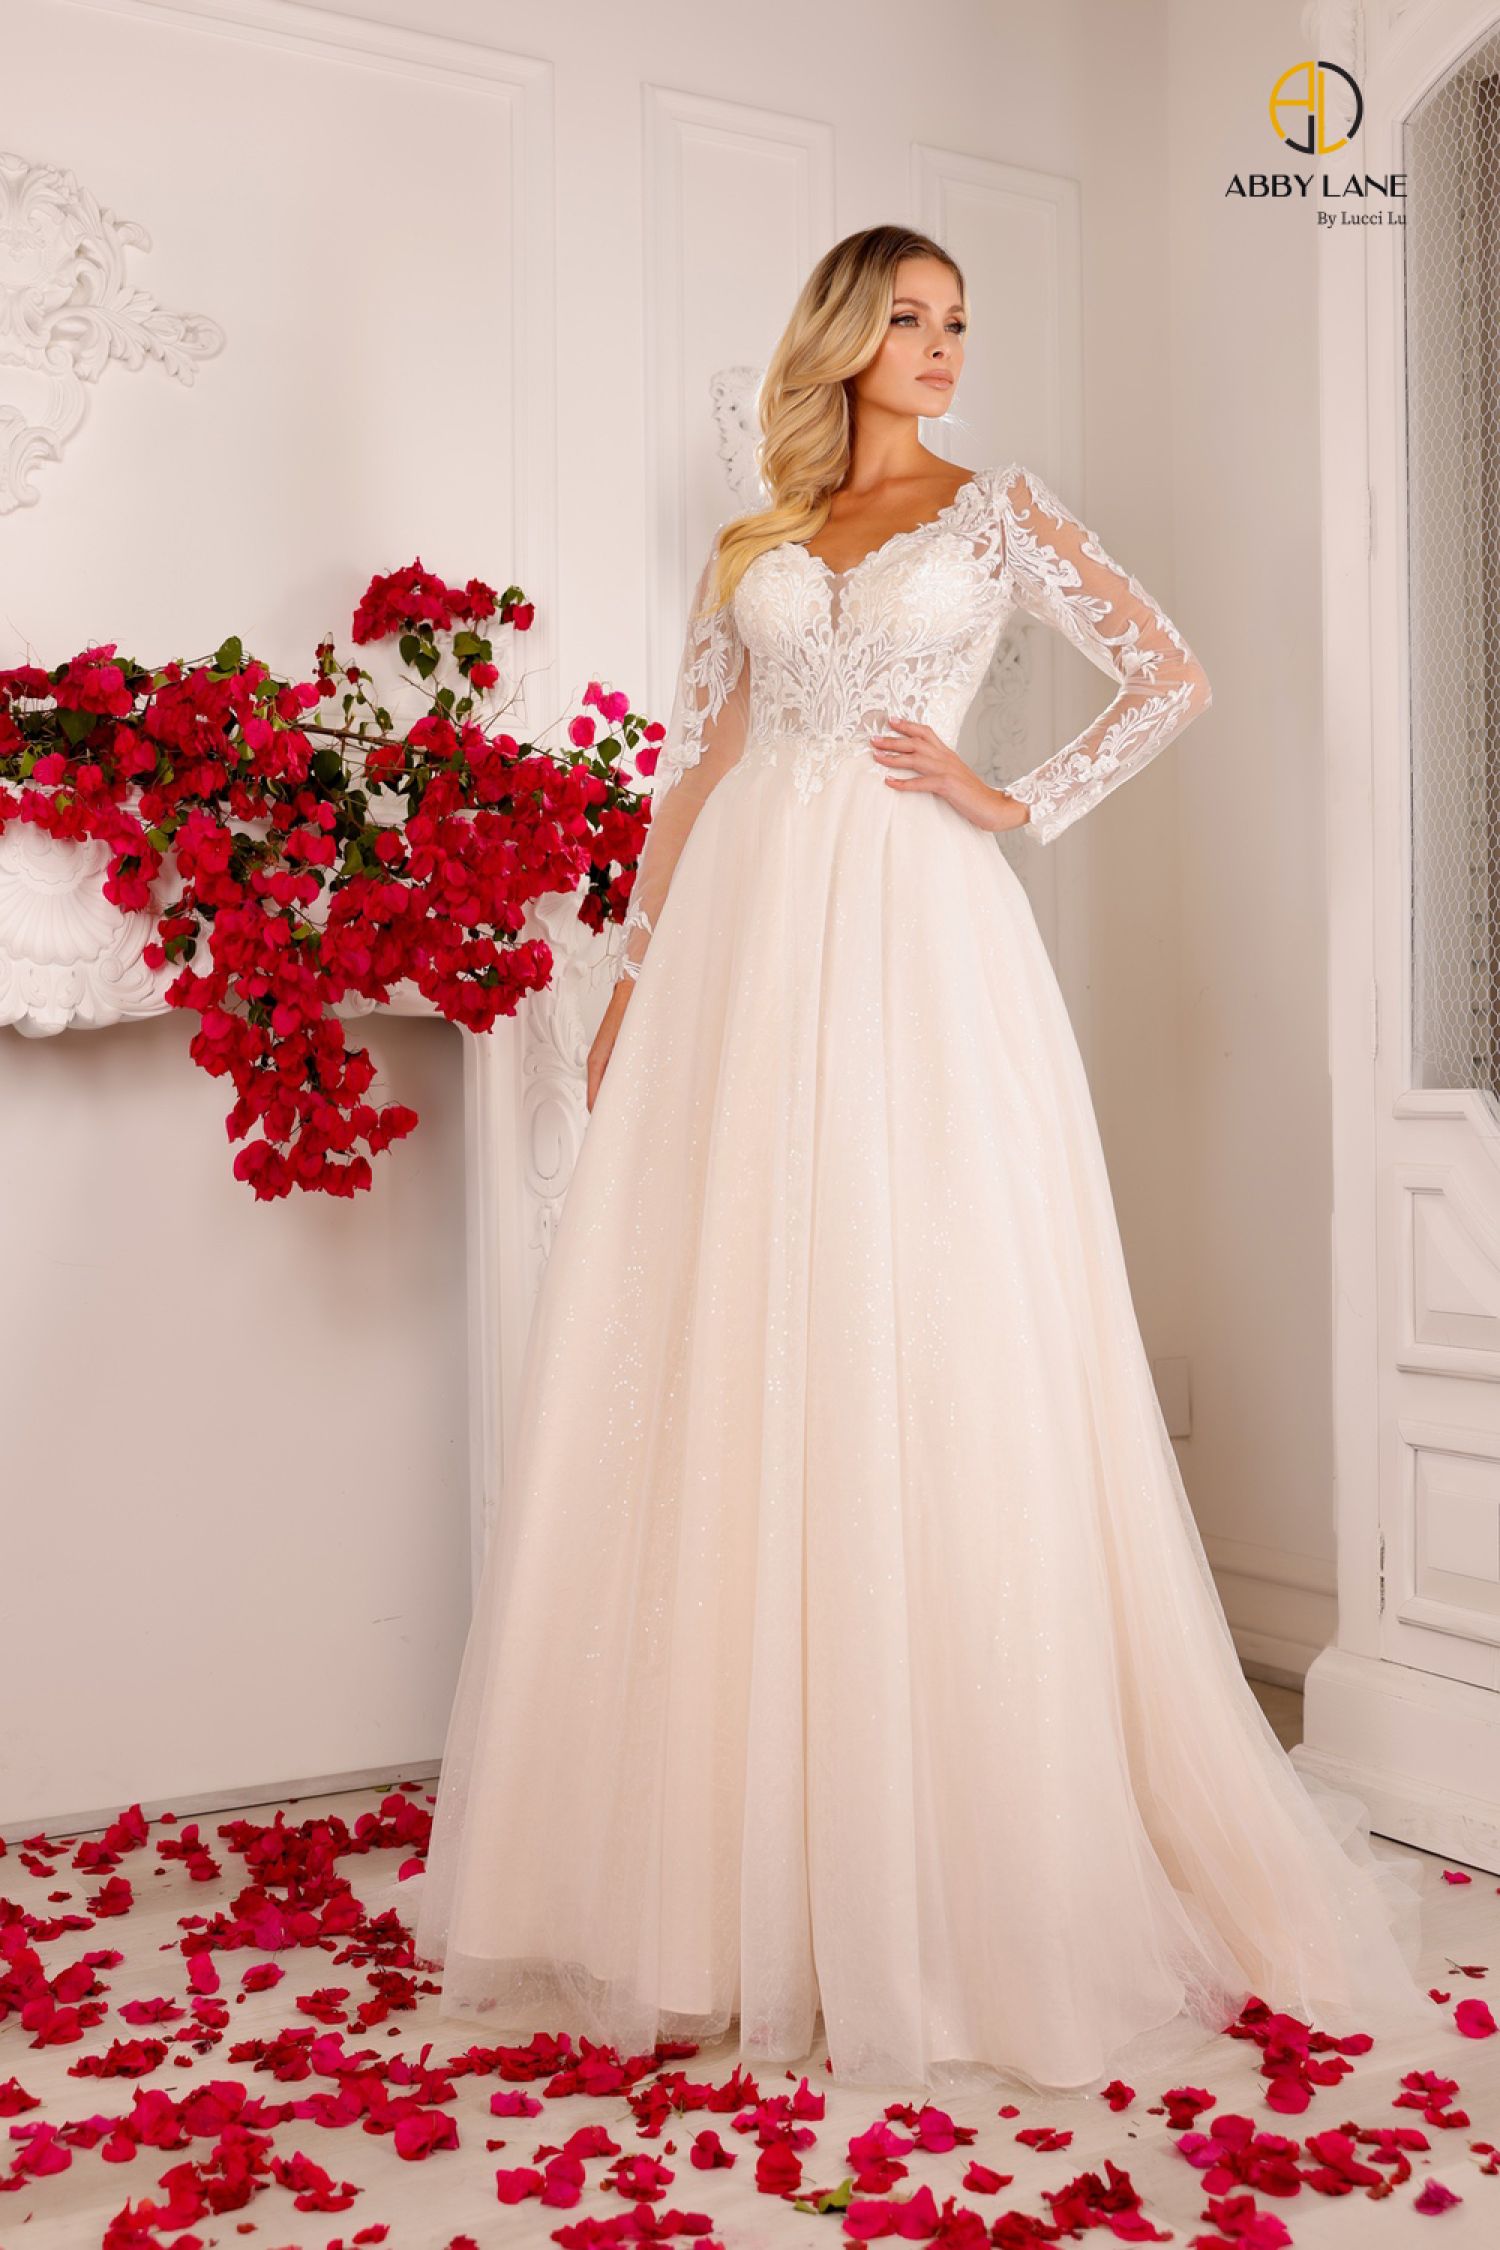 Abby Lane Bridal 97178 Satin Wedding Dress Ballgown Strapless